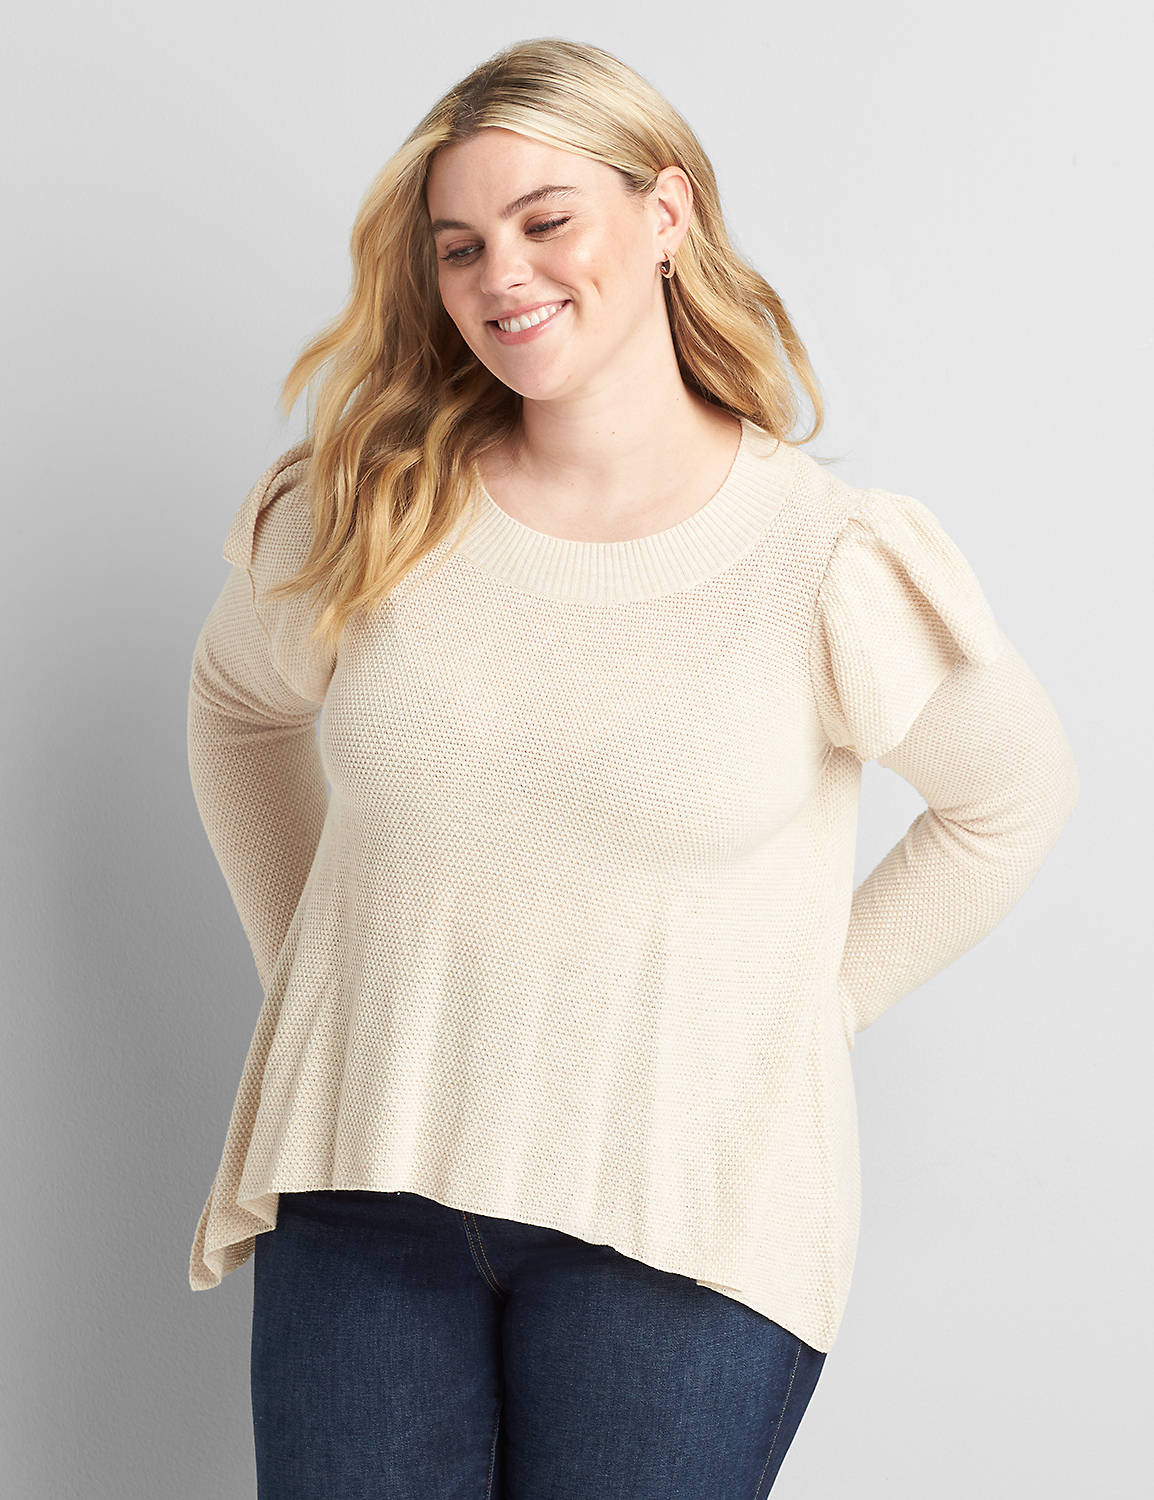 Long Ruffle-Sleeve Sweater Product Image 1